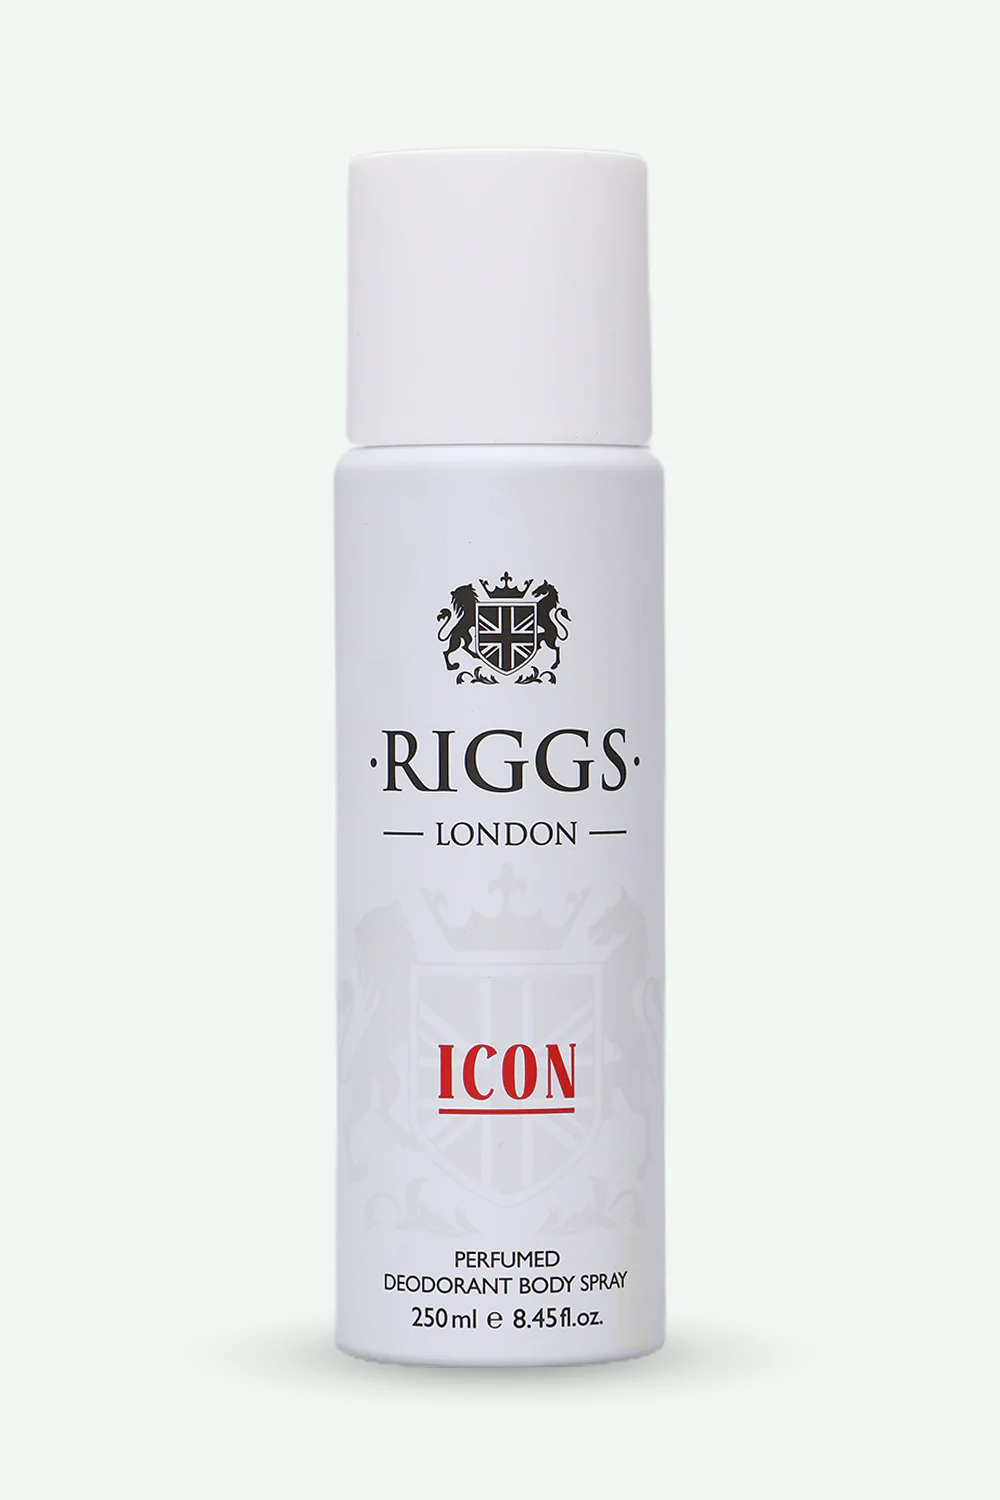 Riggs LONDON Men's Deodorant Body Spray, Icon - 8.45 Fl.Oz (250ml)